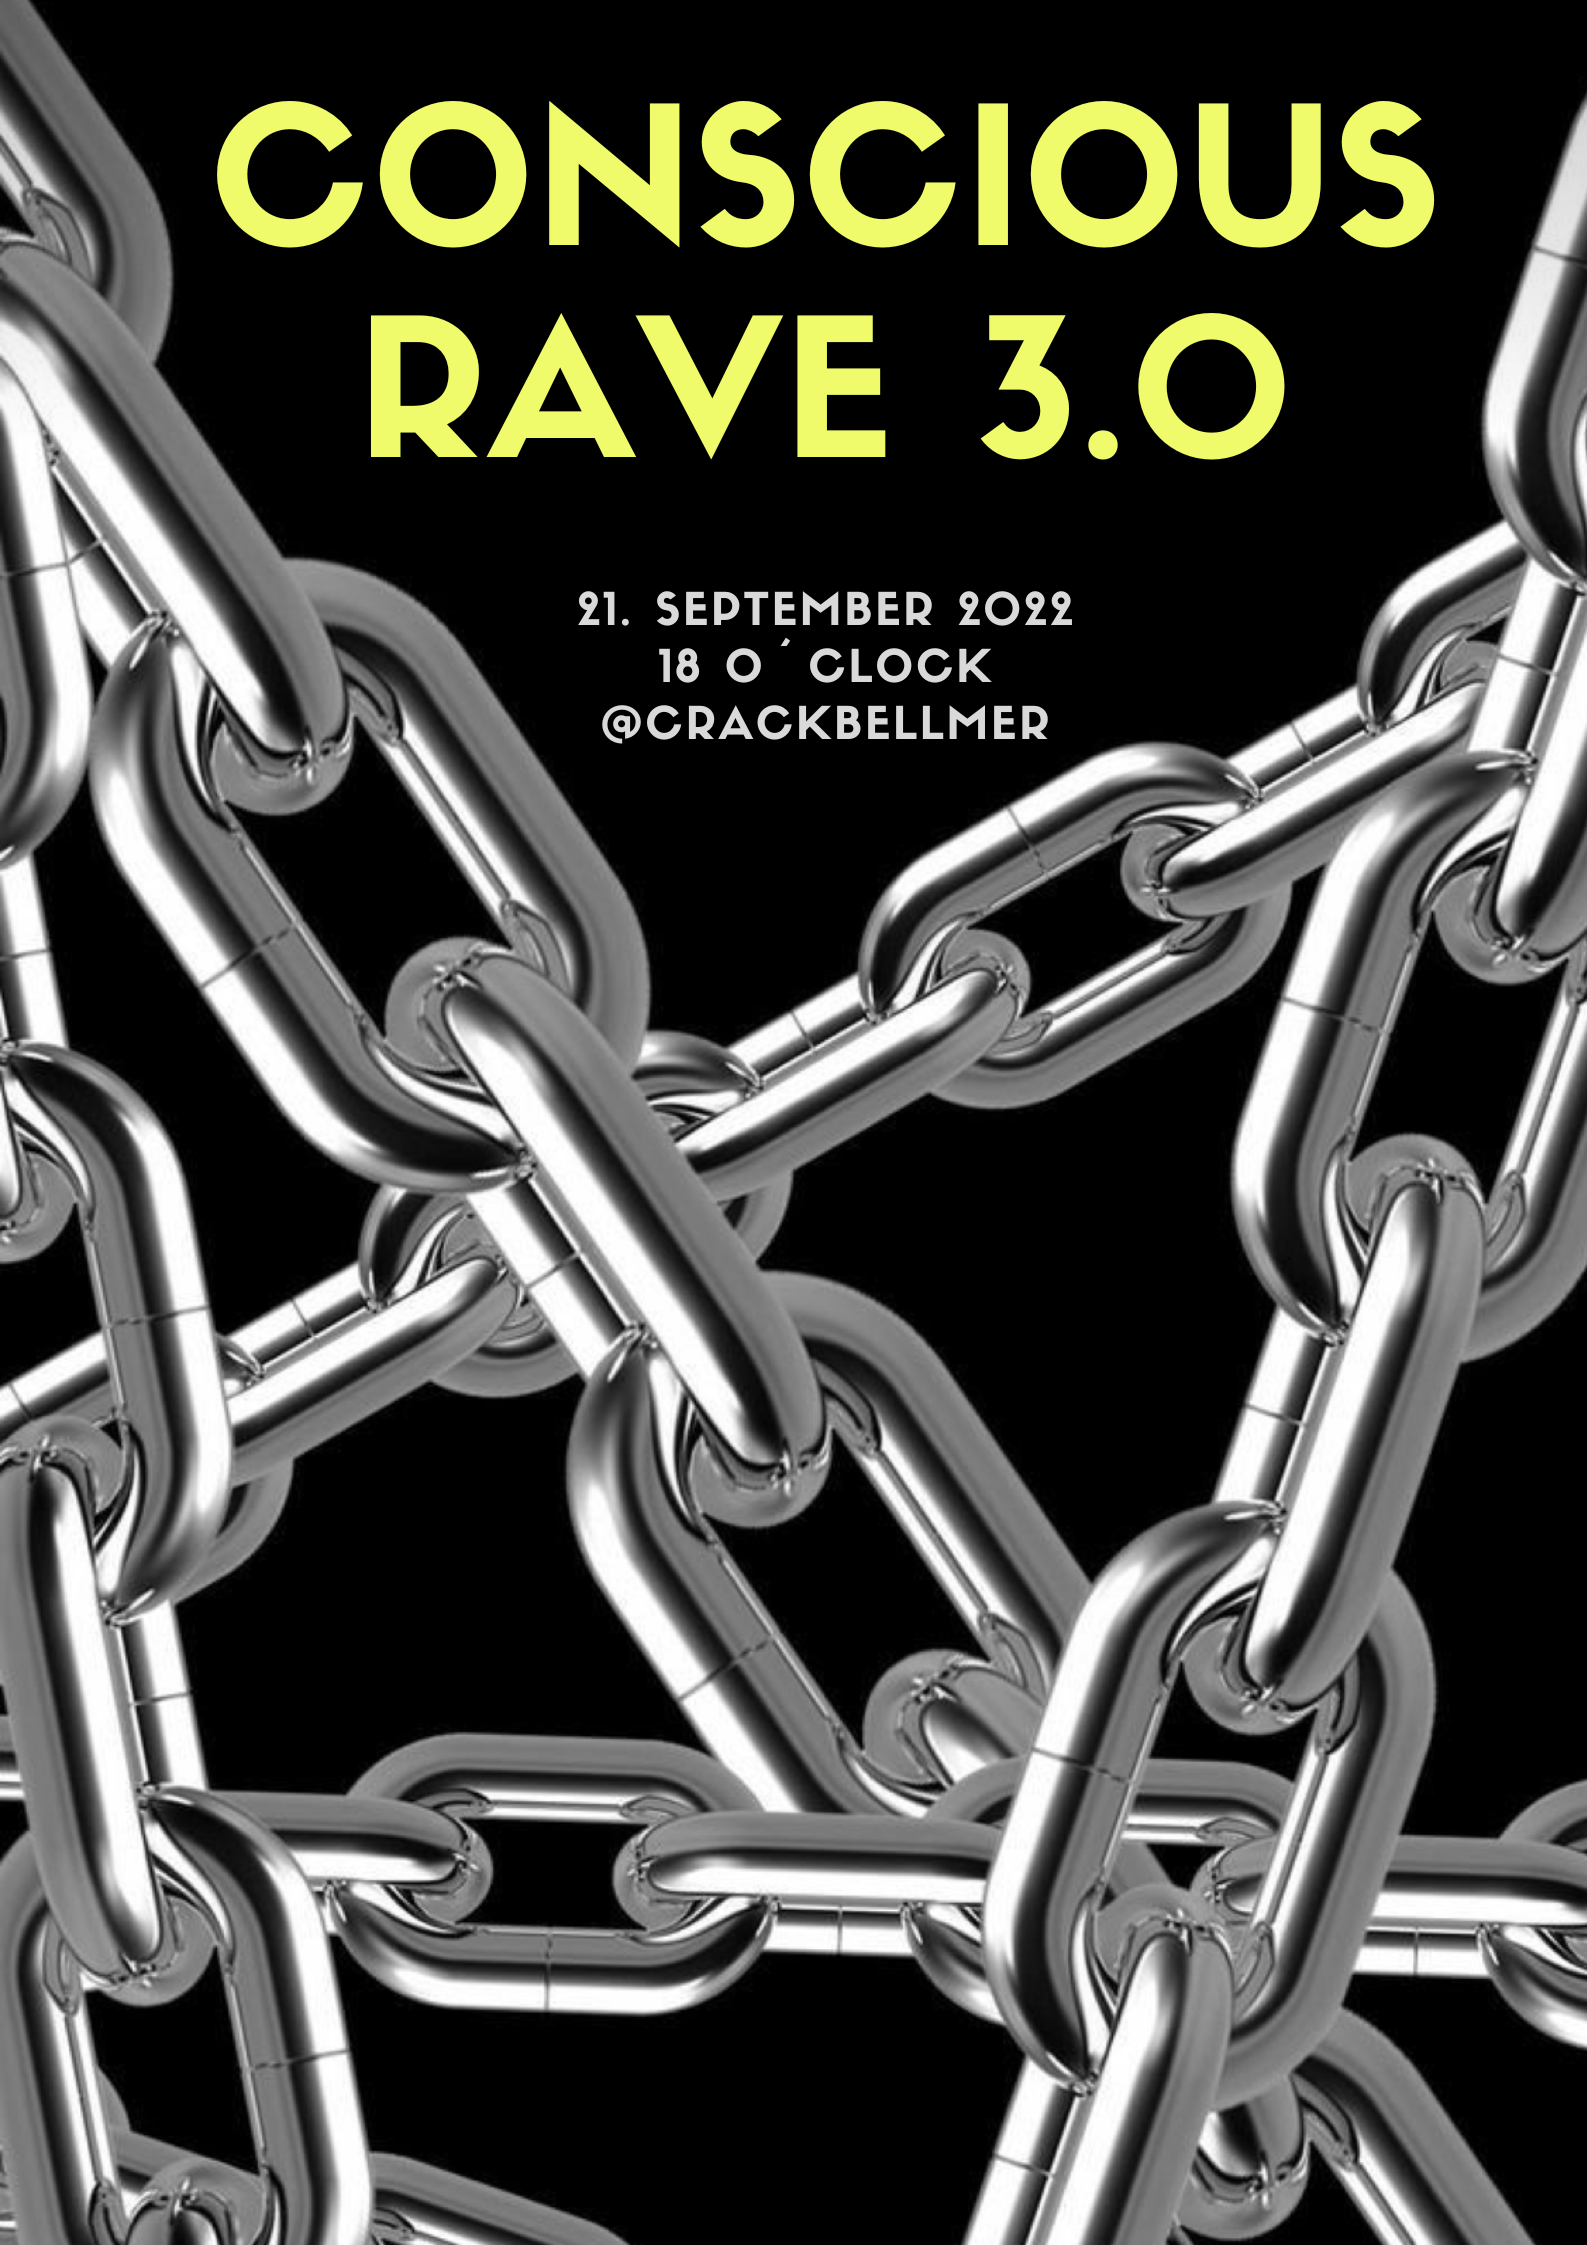 Conscious Rave 3.0 - Flyer front